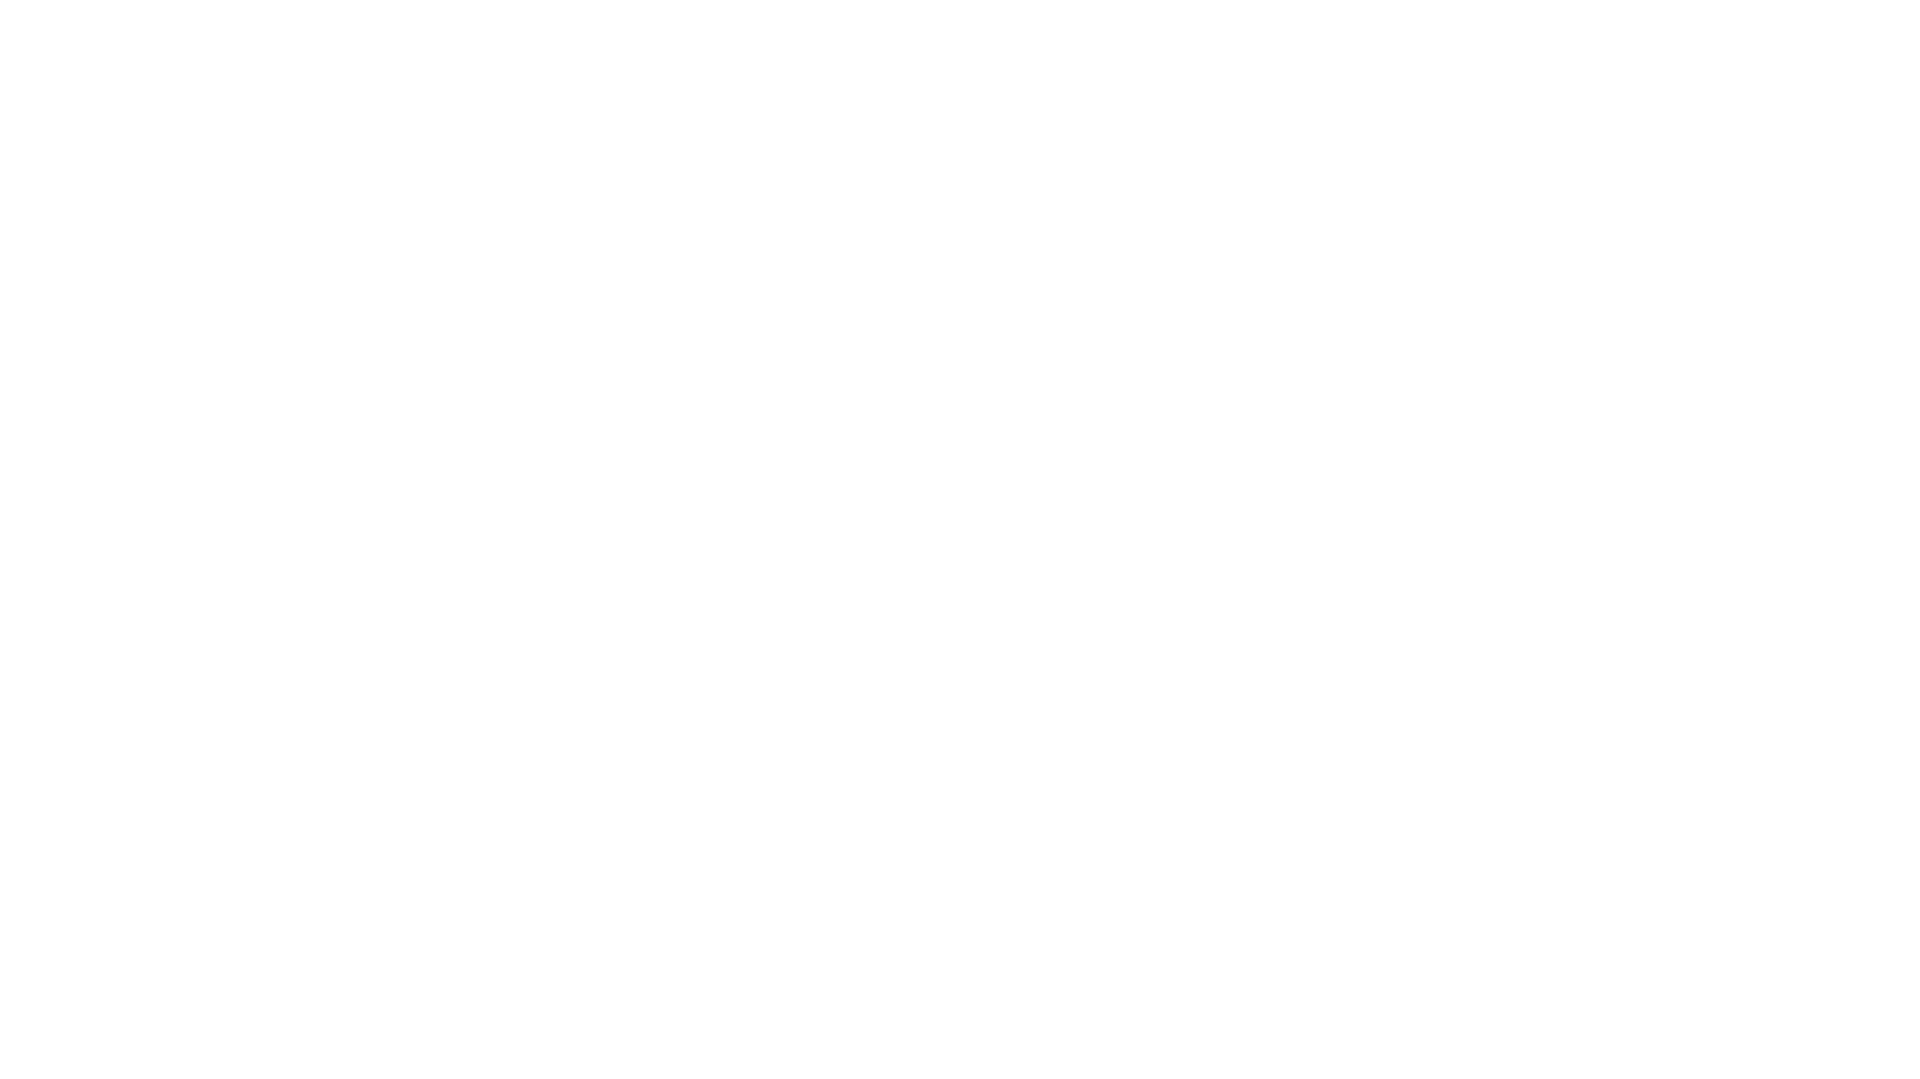 Bäckerei Heuberger-logo